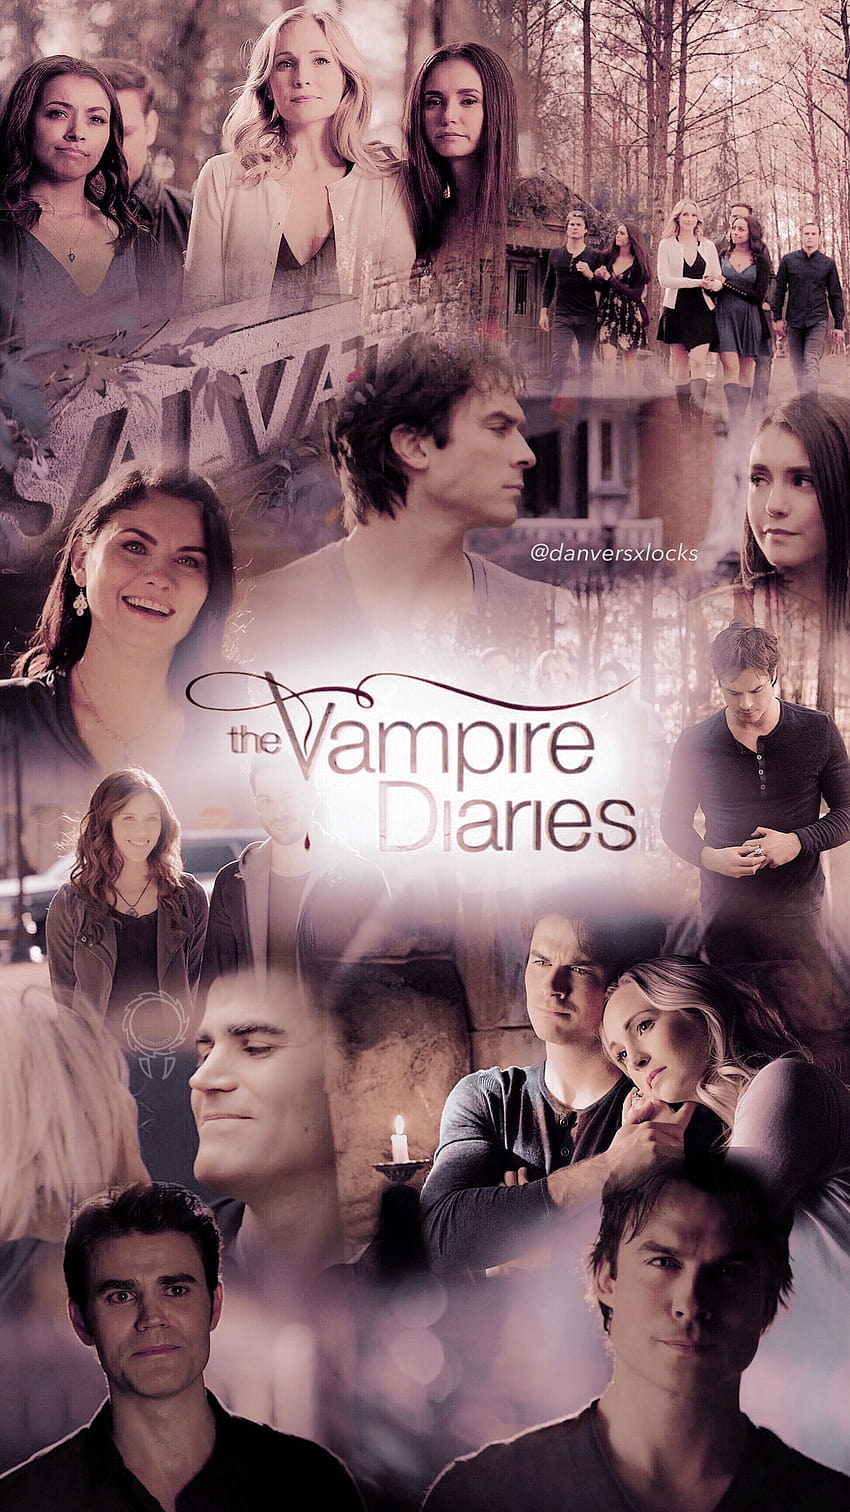 TVD Wallpaper | Vampire diaries movie, Vampire diaries books, Vampire  diaries poster